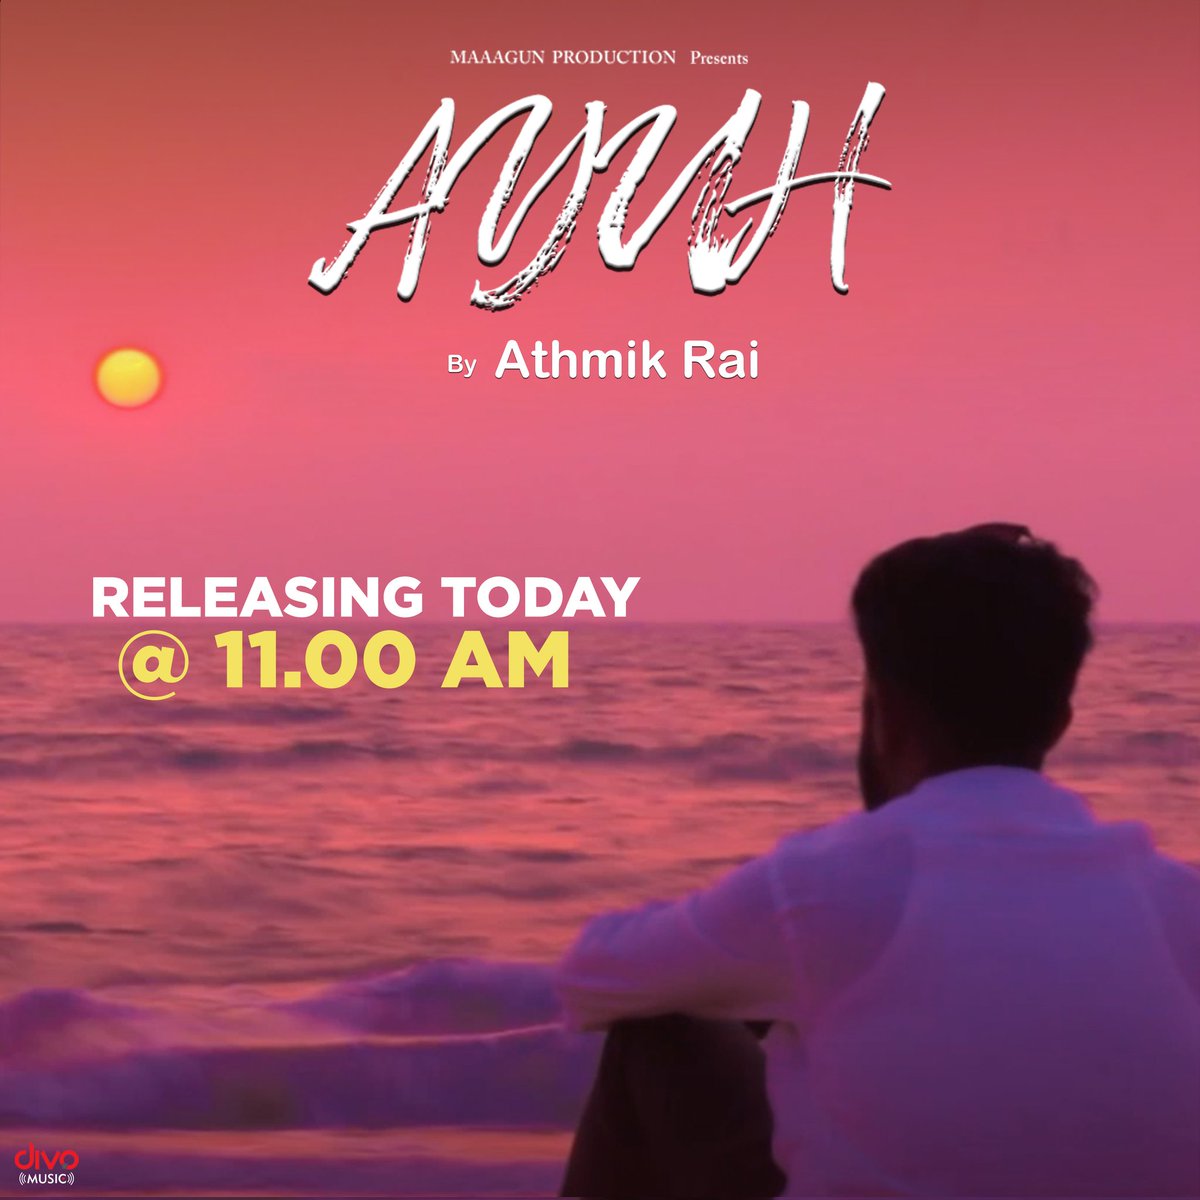 #Ayuh, kannada music video will be out today at 11 AM on @divomusicindia YouTube channel 🎶

#AthmikRai #ChethanNaik #PramodMaravanthe #AniketMohanty #DivoMusic